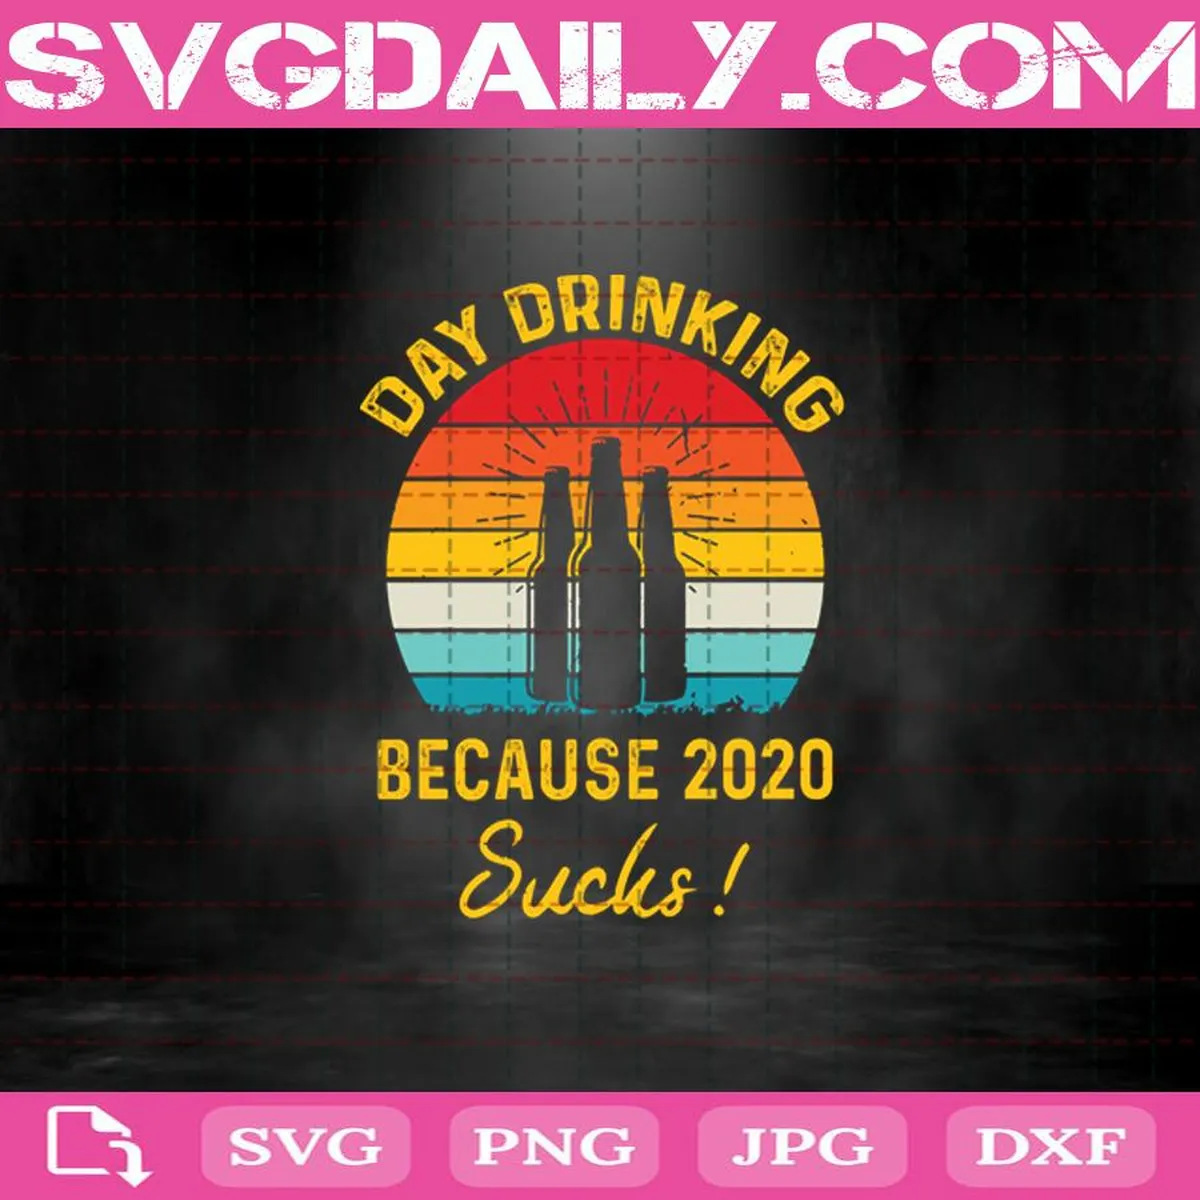 Day Drink Because 2020 Sucks Svg, Day Drink 2020 Svg, Drink Svg, Drinking Svg, Drunk Svg, Love Drunk Svg